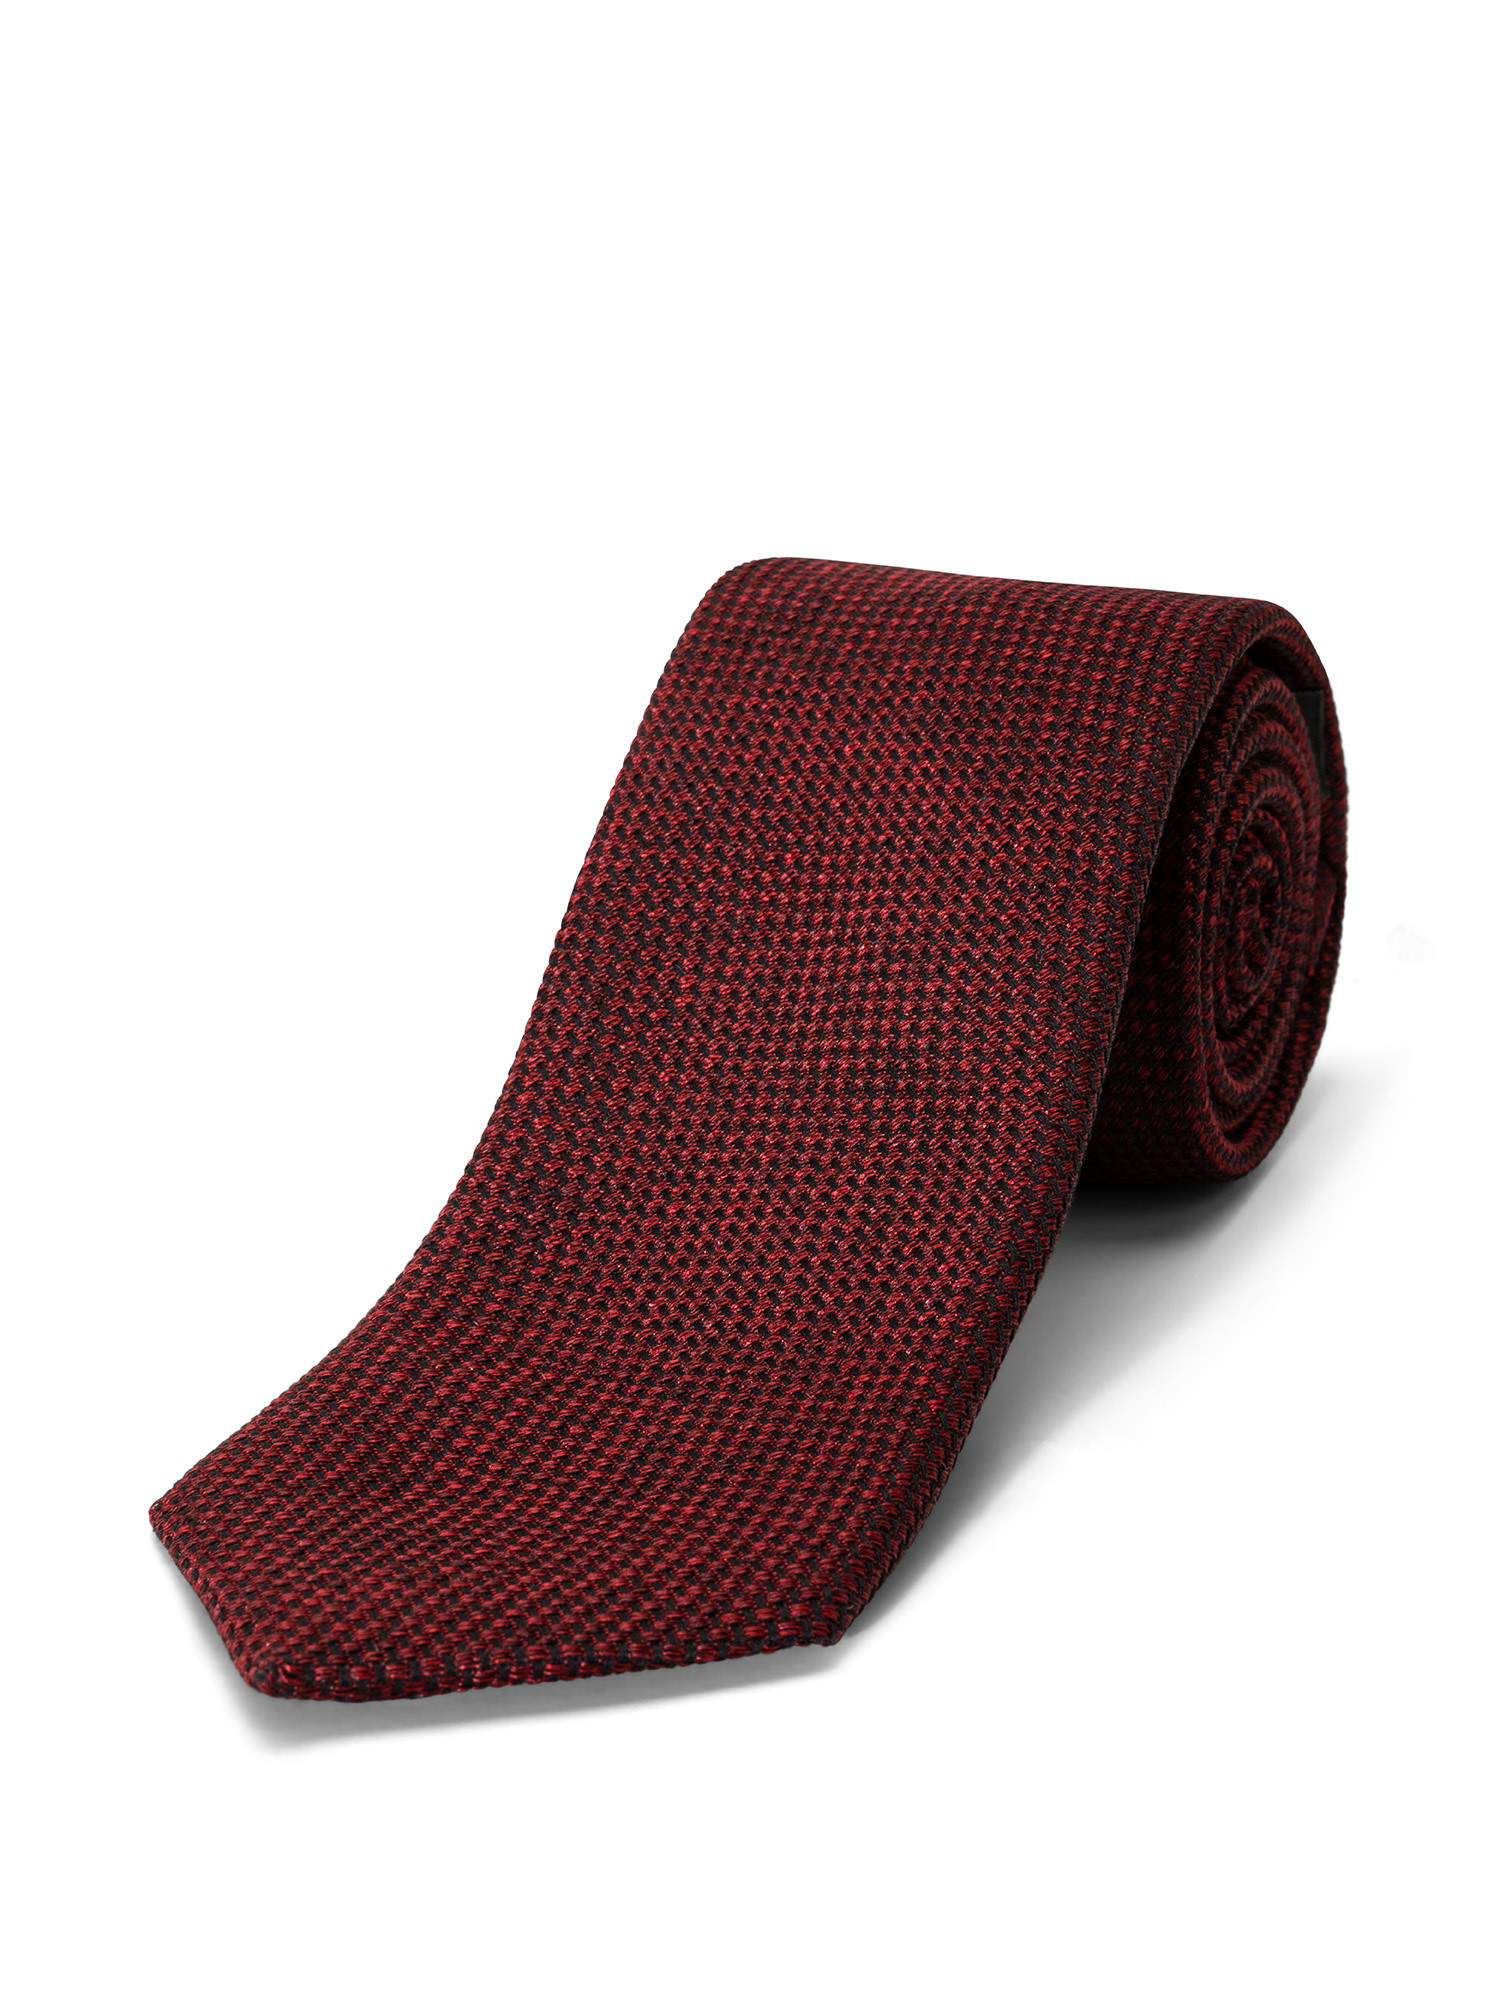 Luca D'Altieri - Classic patterned silk tie, Red Bordeaux, large image number 0